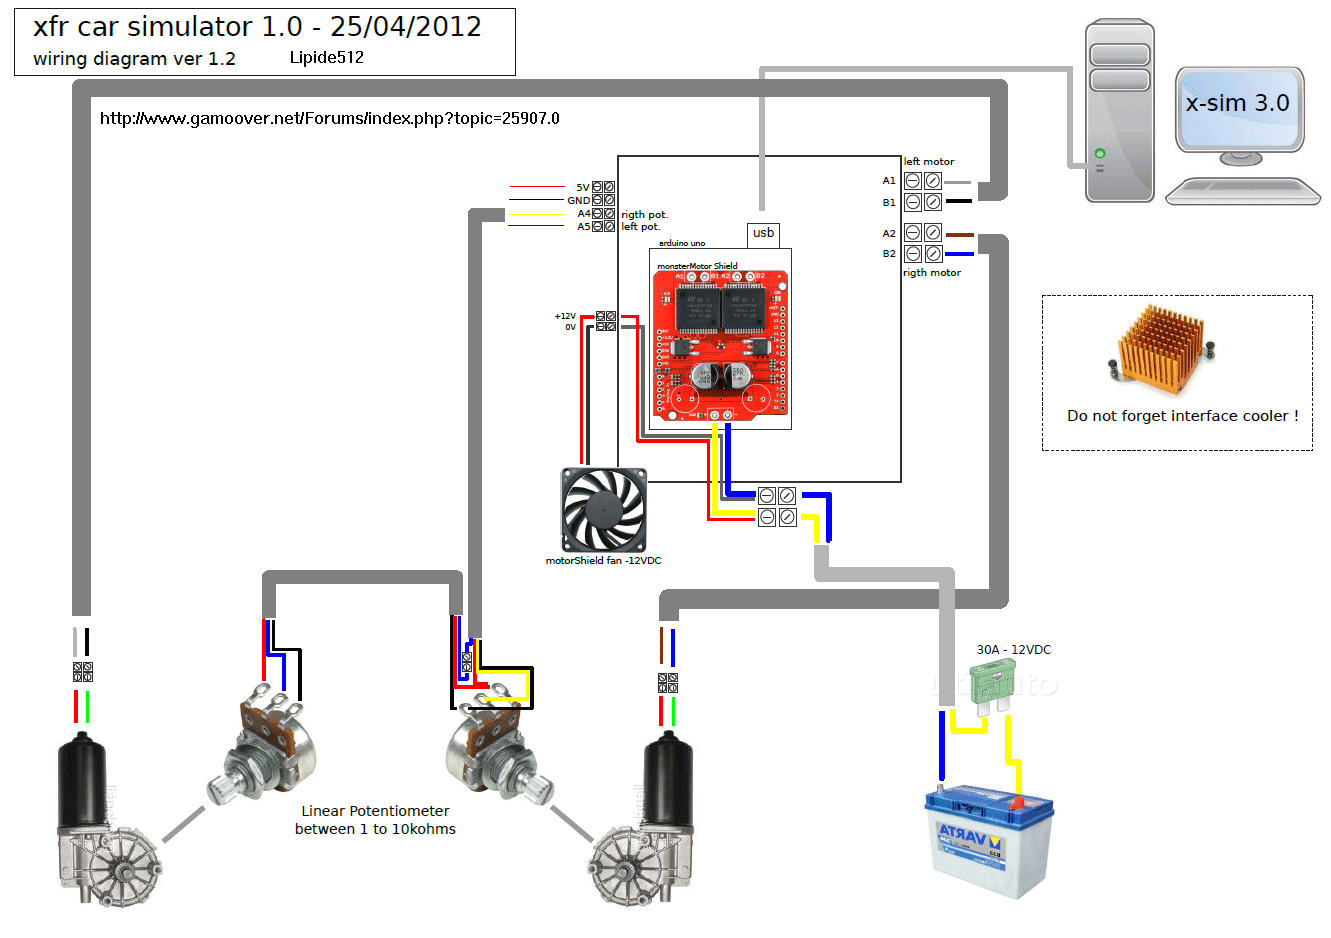 lipide512-wiringdiagram.gif